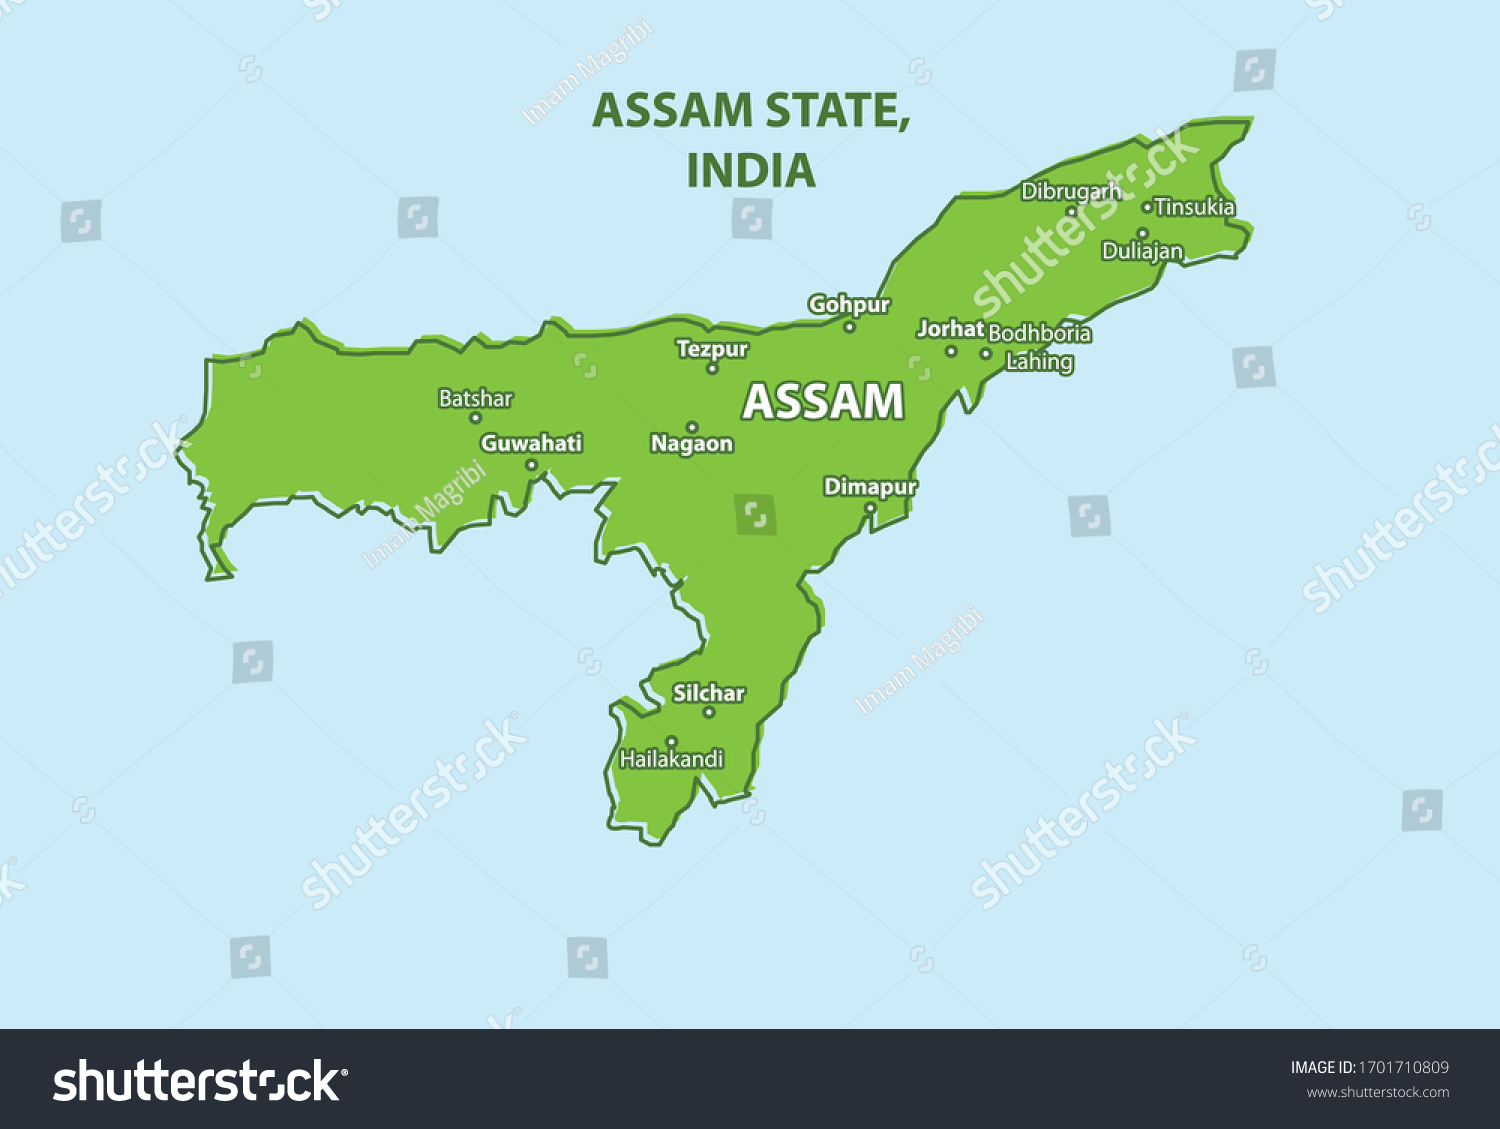 Assam country